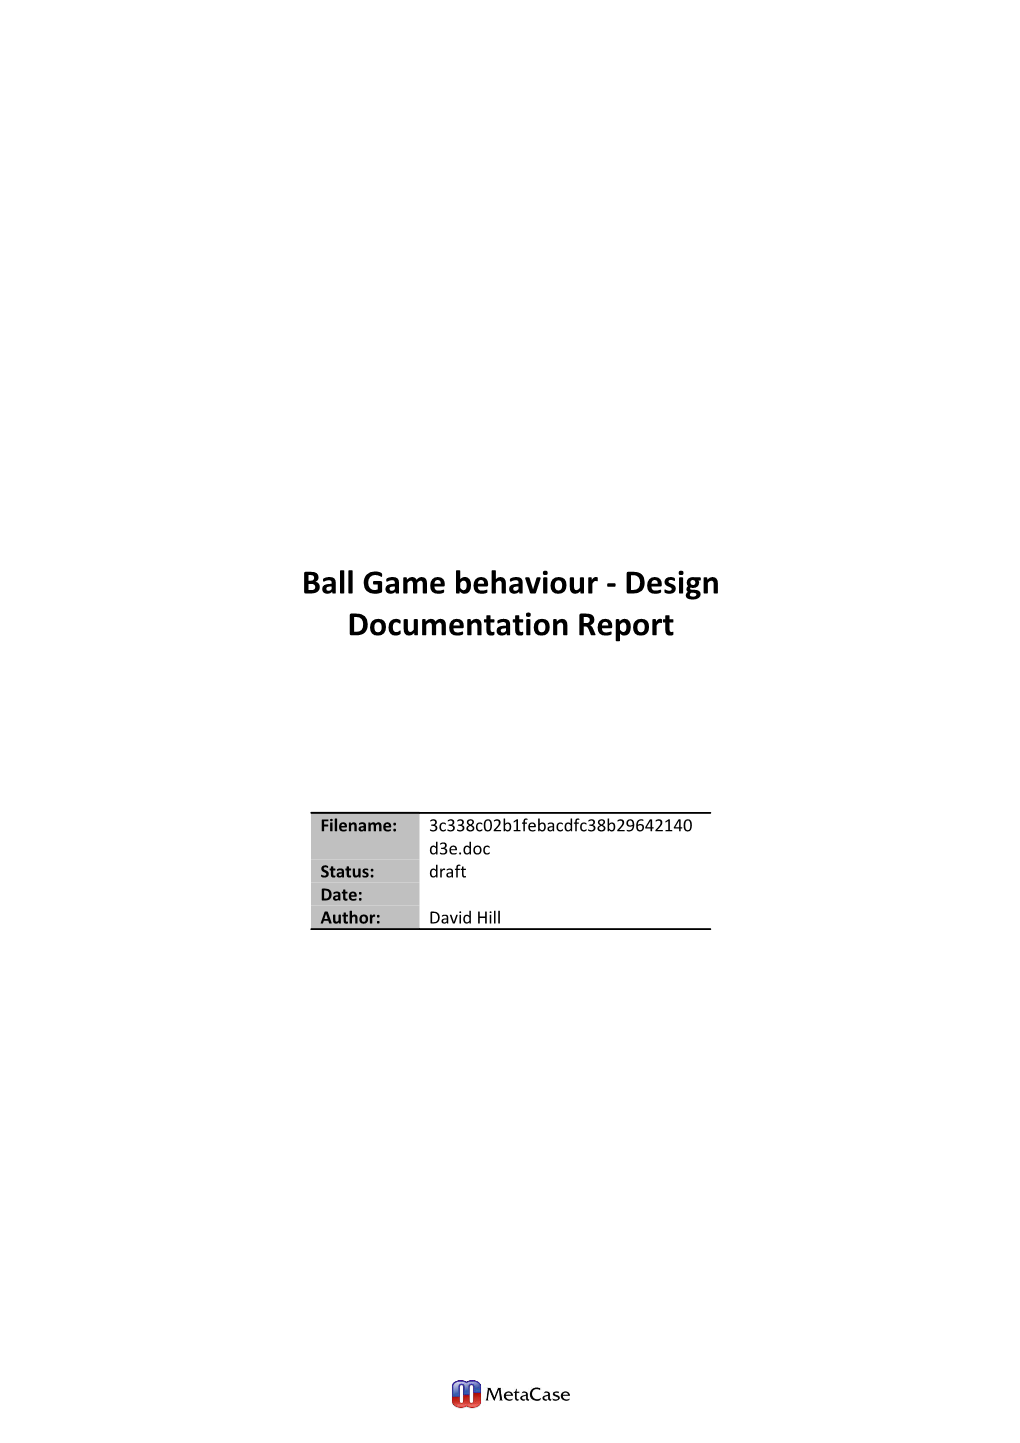 Ball Game Behaviour - Design